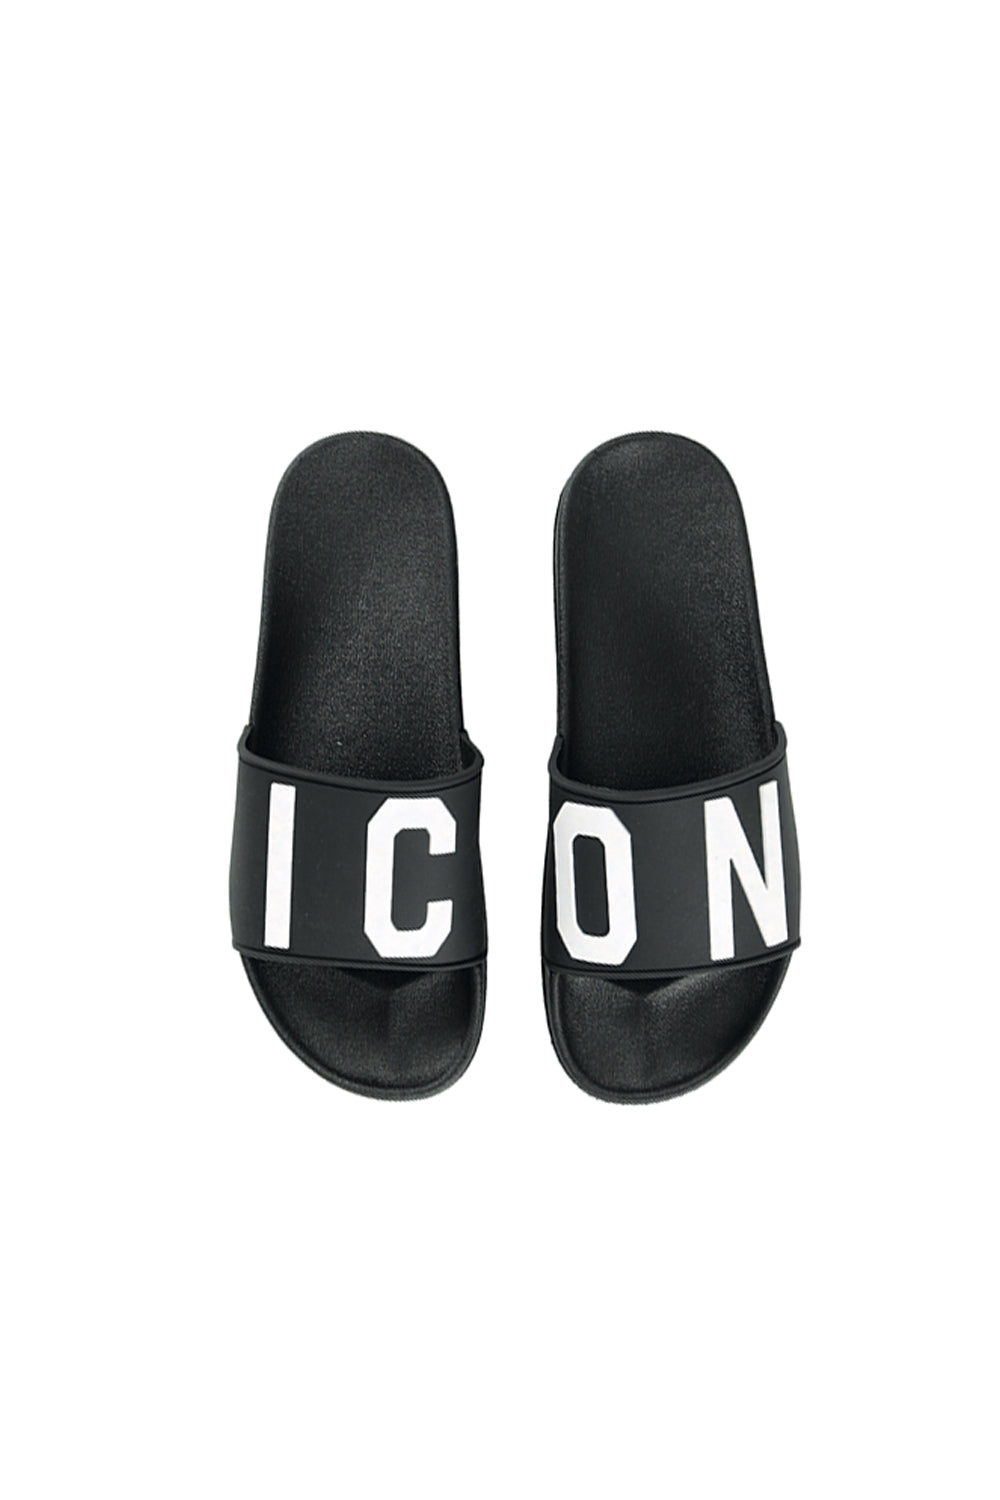 ICON Slides